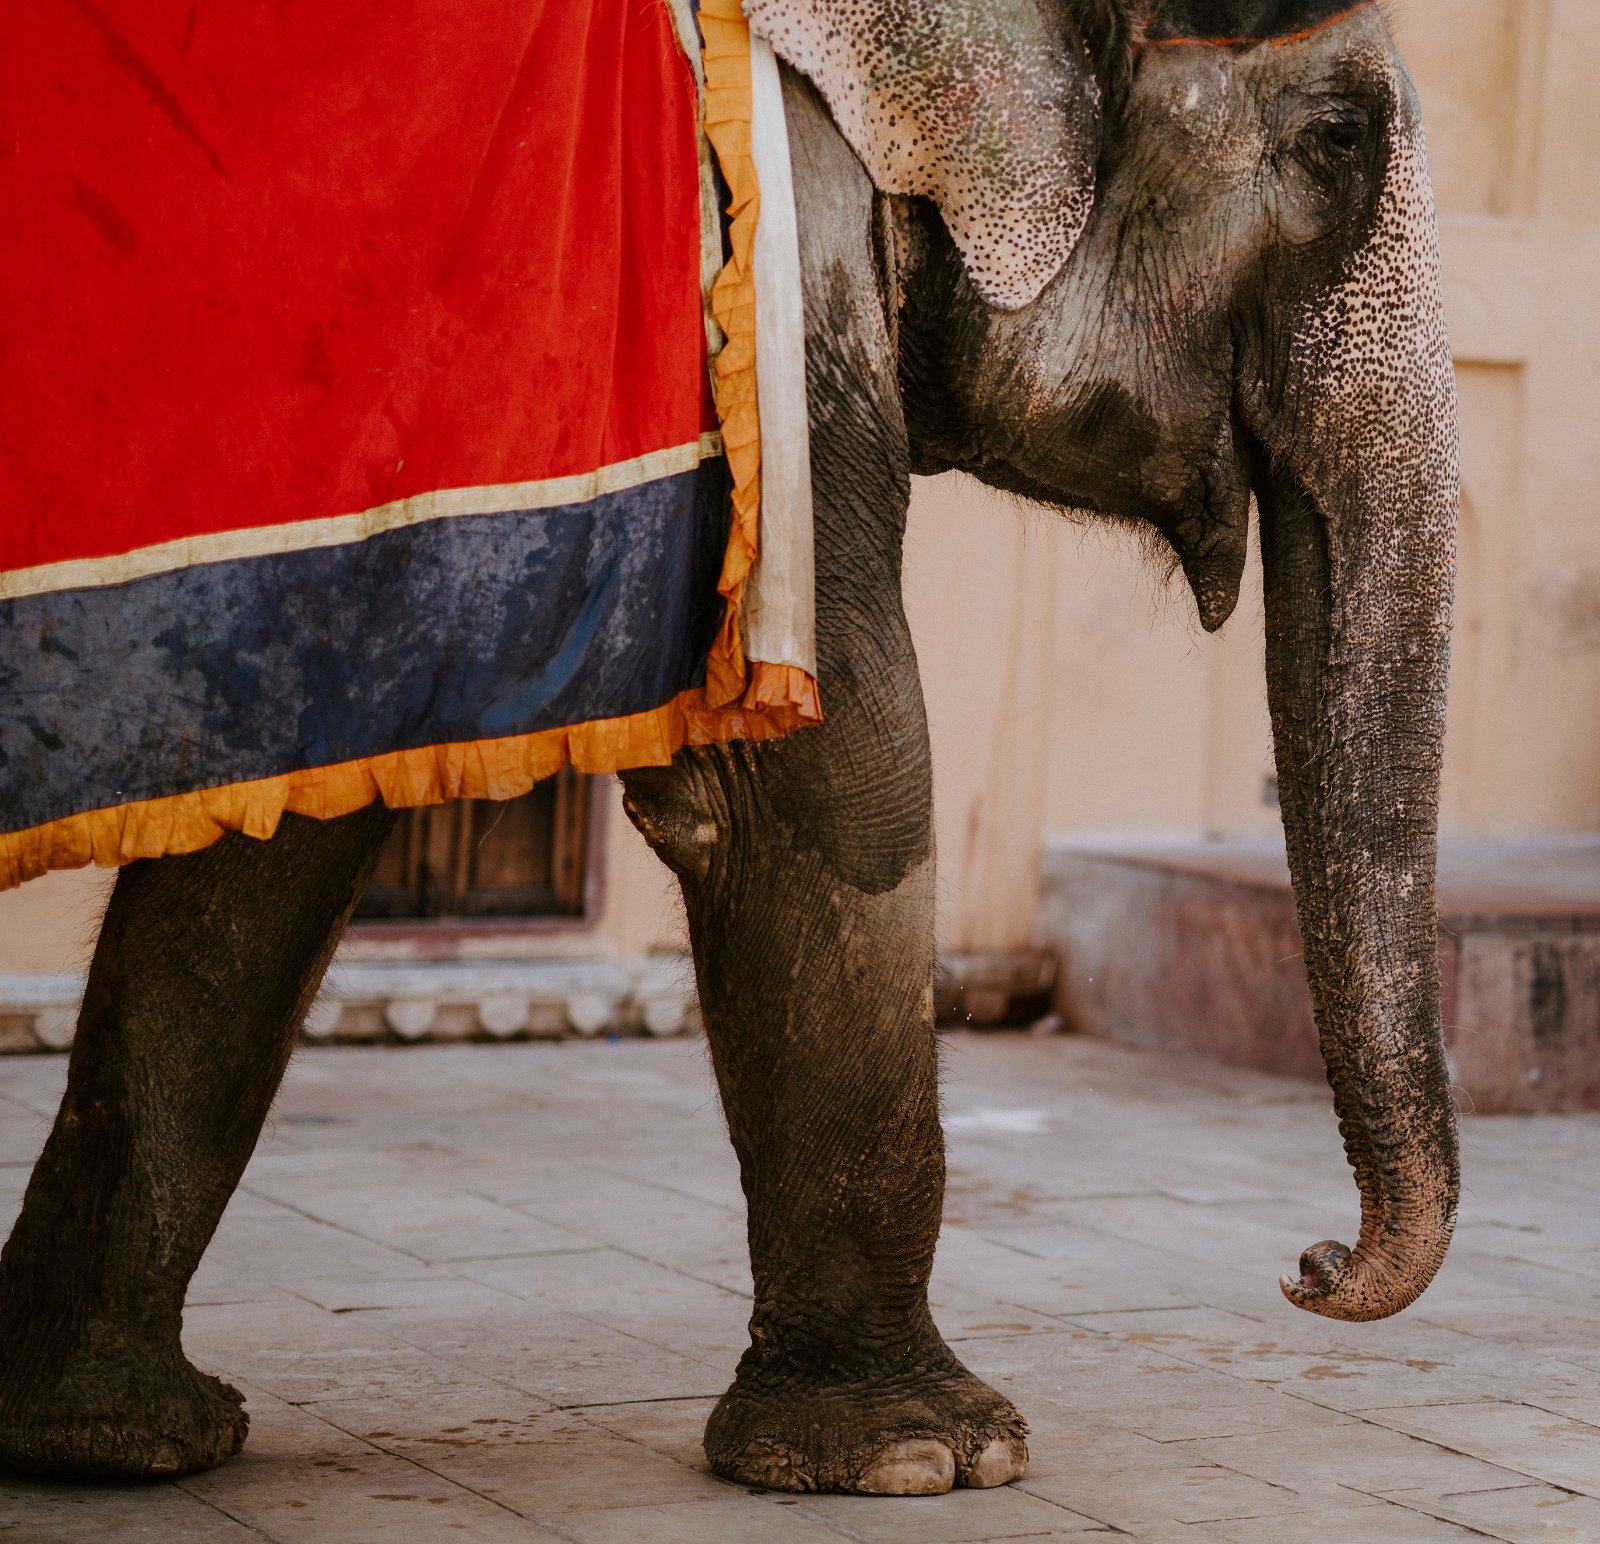 Elephants in Thailand 'Broken' for Lucrative Animal Tourism